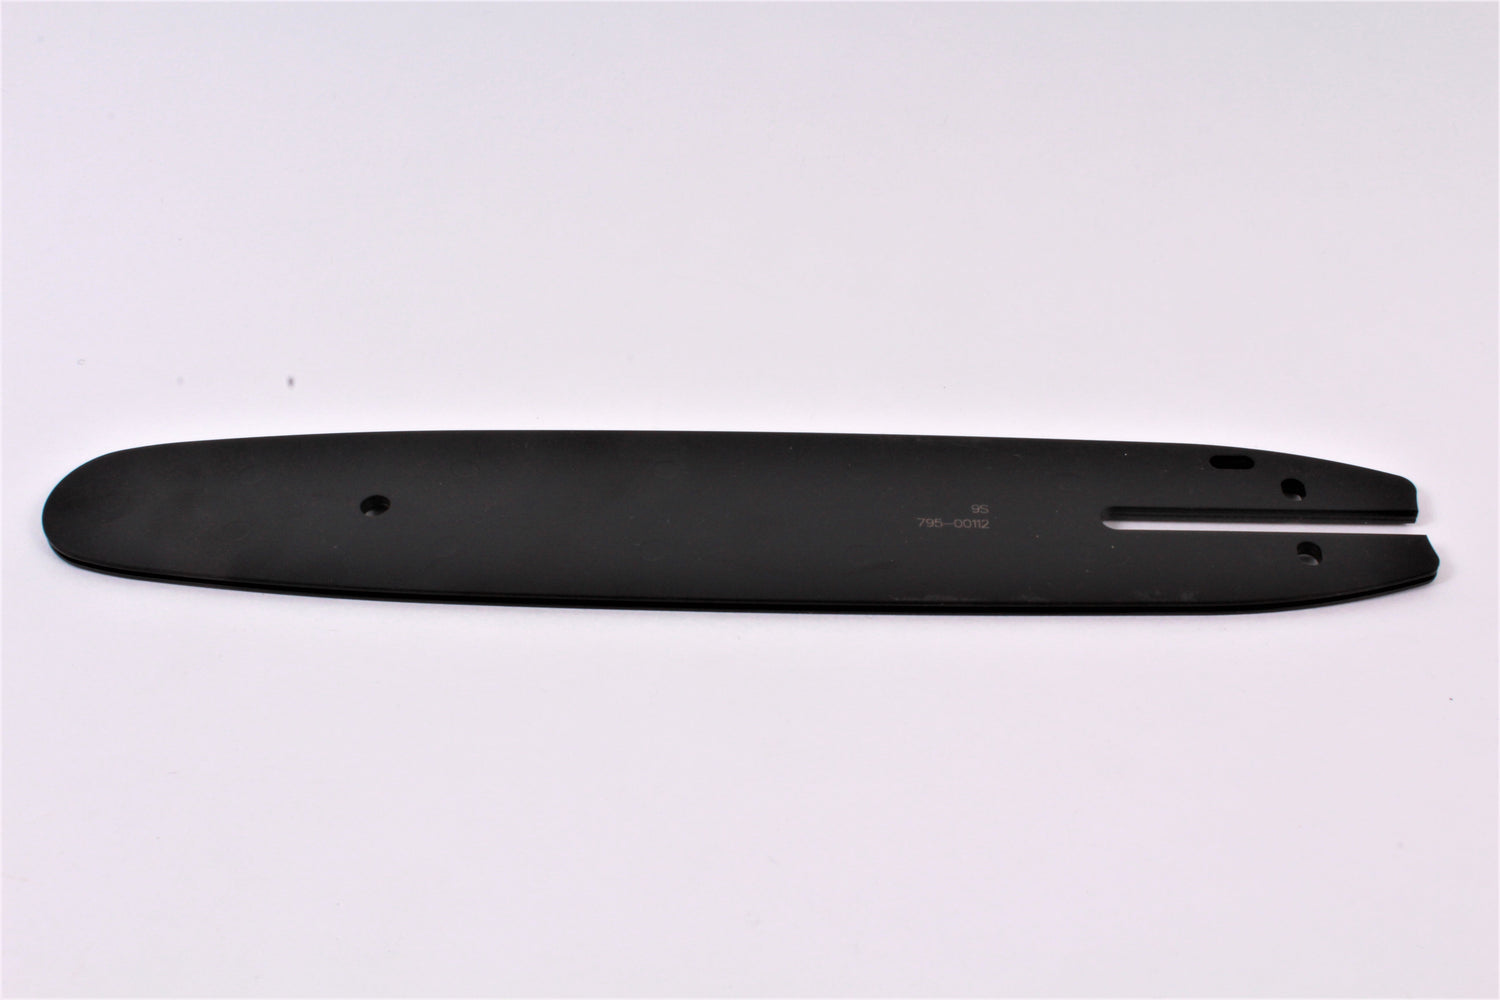 Genuine MTD 795-00112 10" Pole Saw Bar Fits Remington